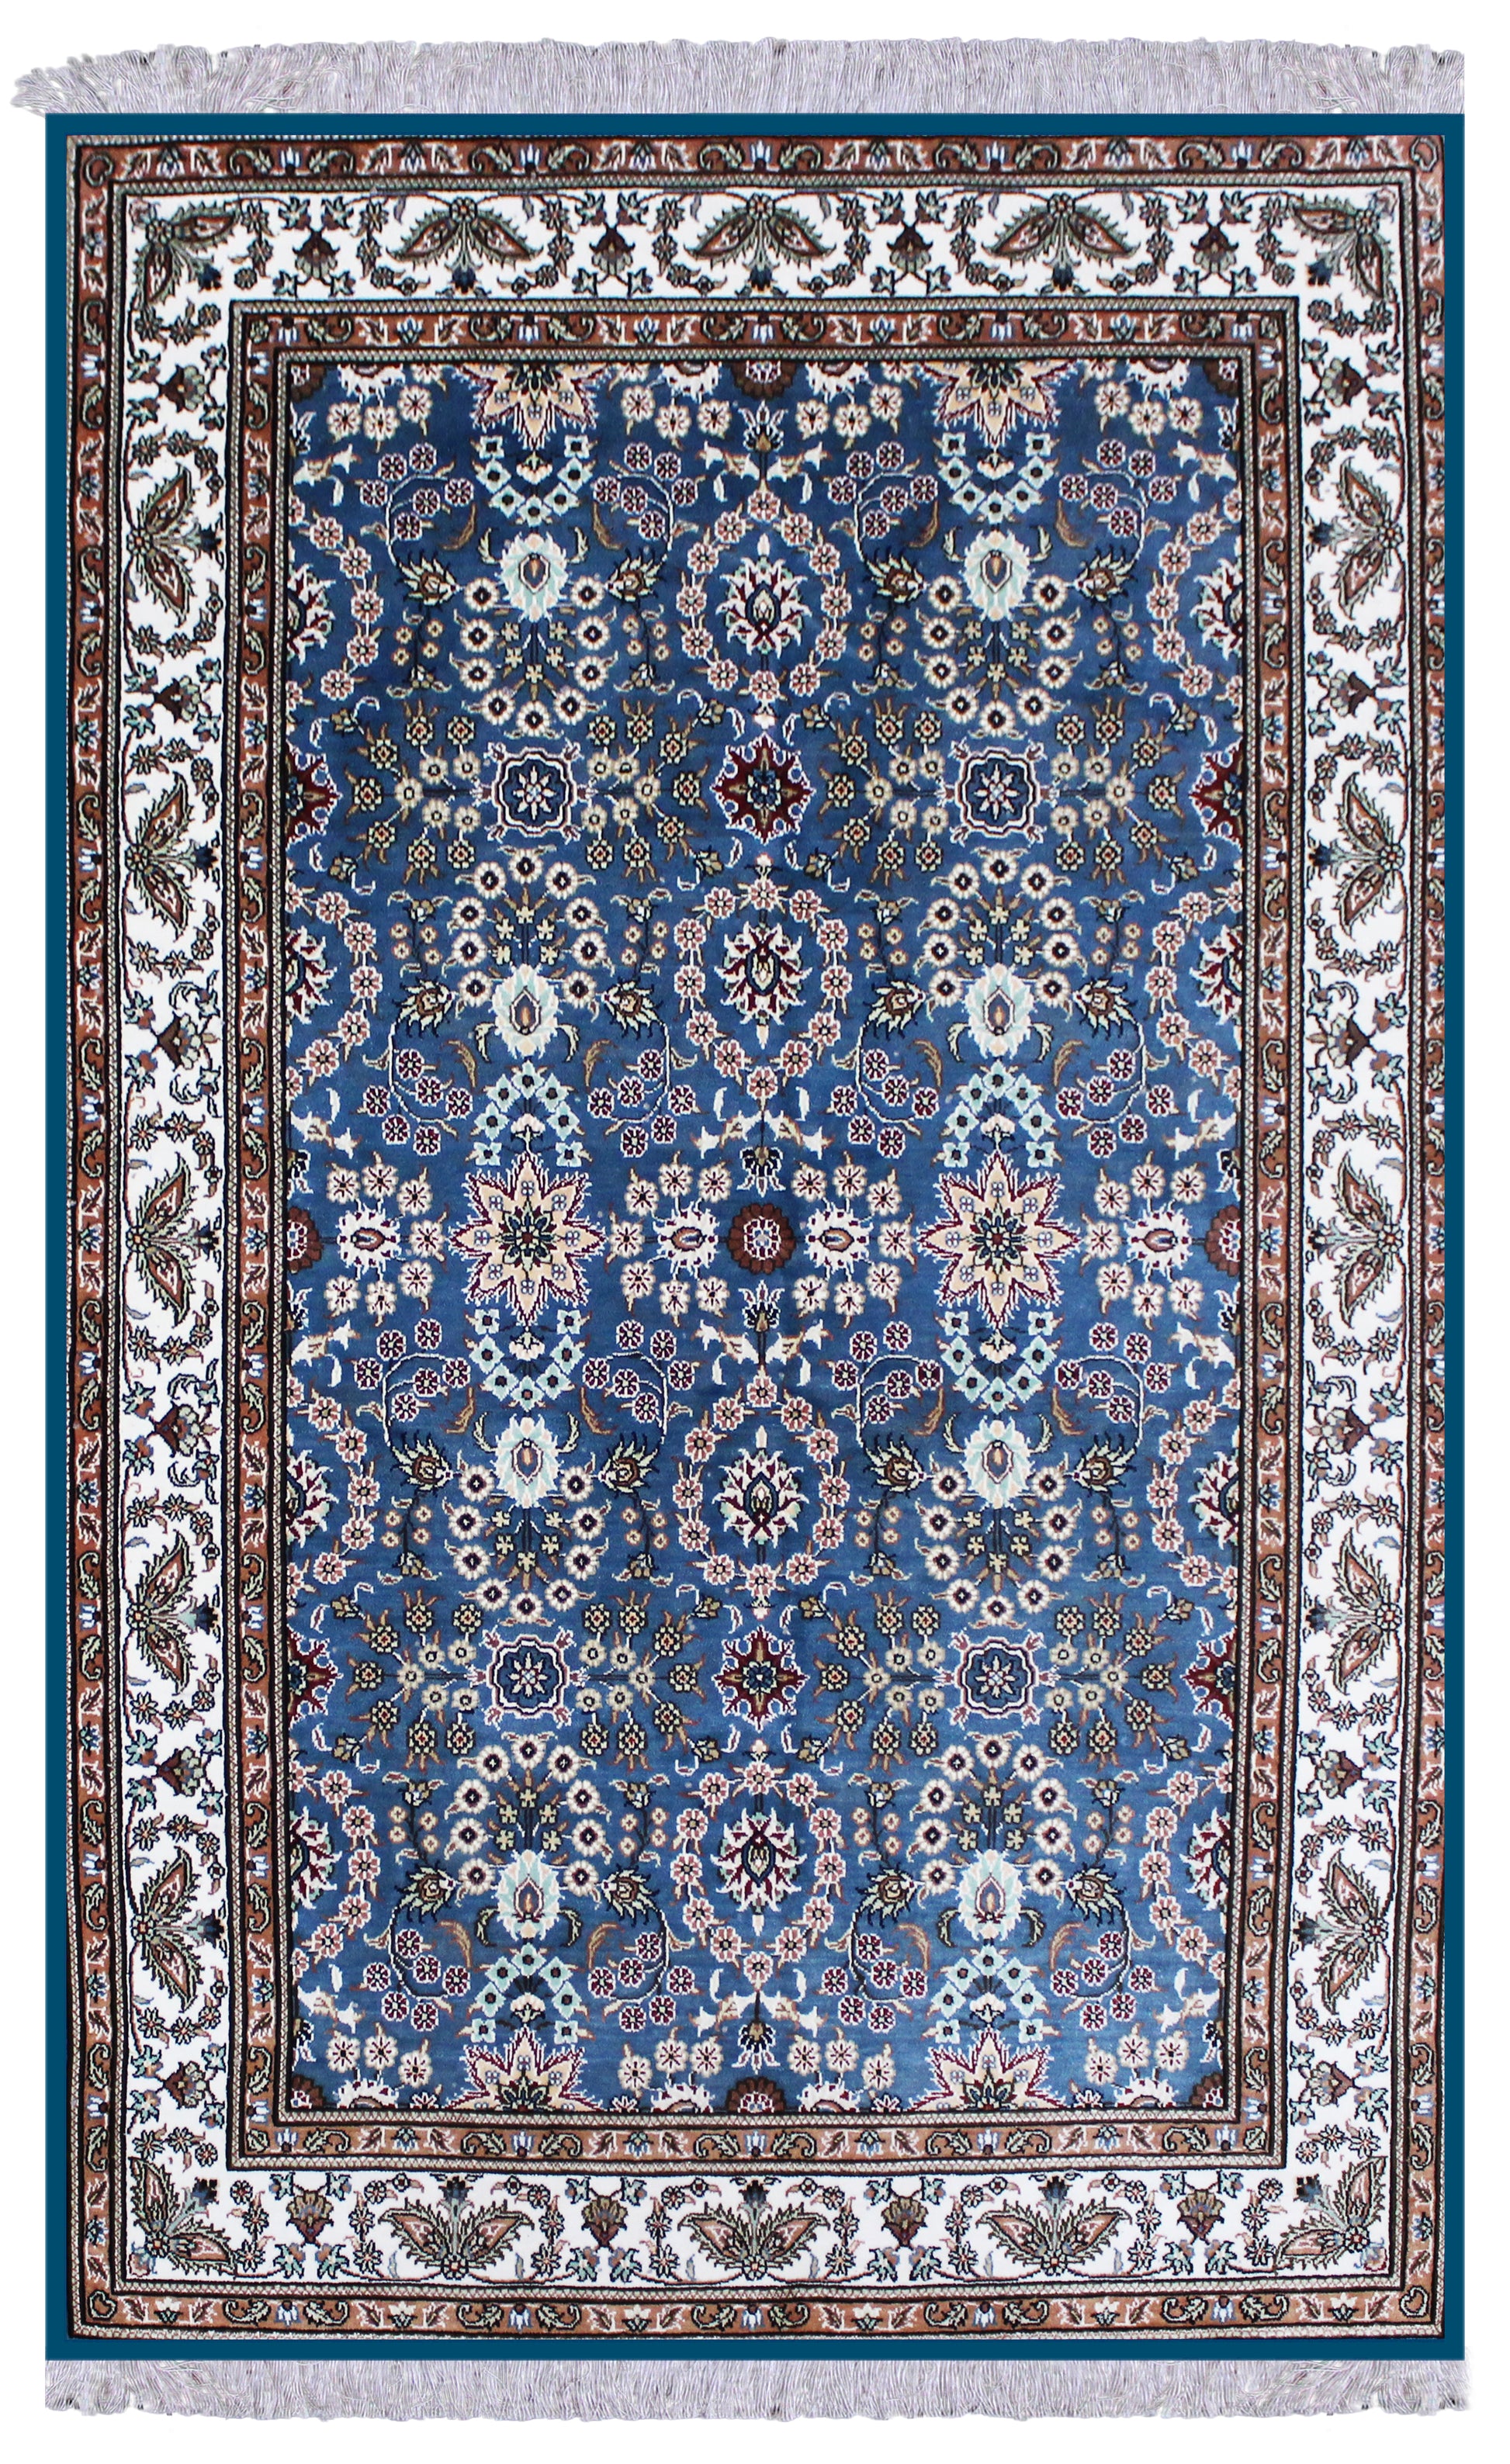 Turkistan Area Rug 185cm x 123cm